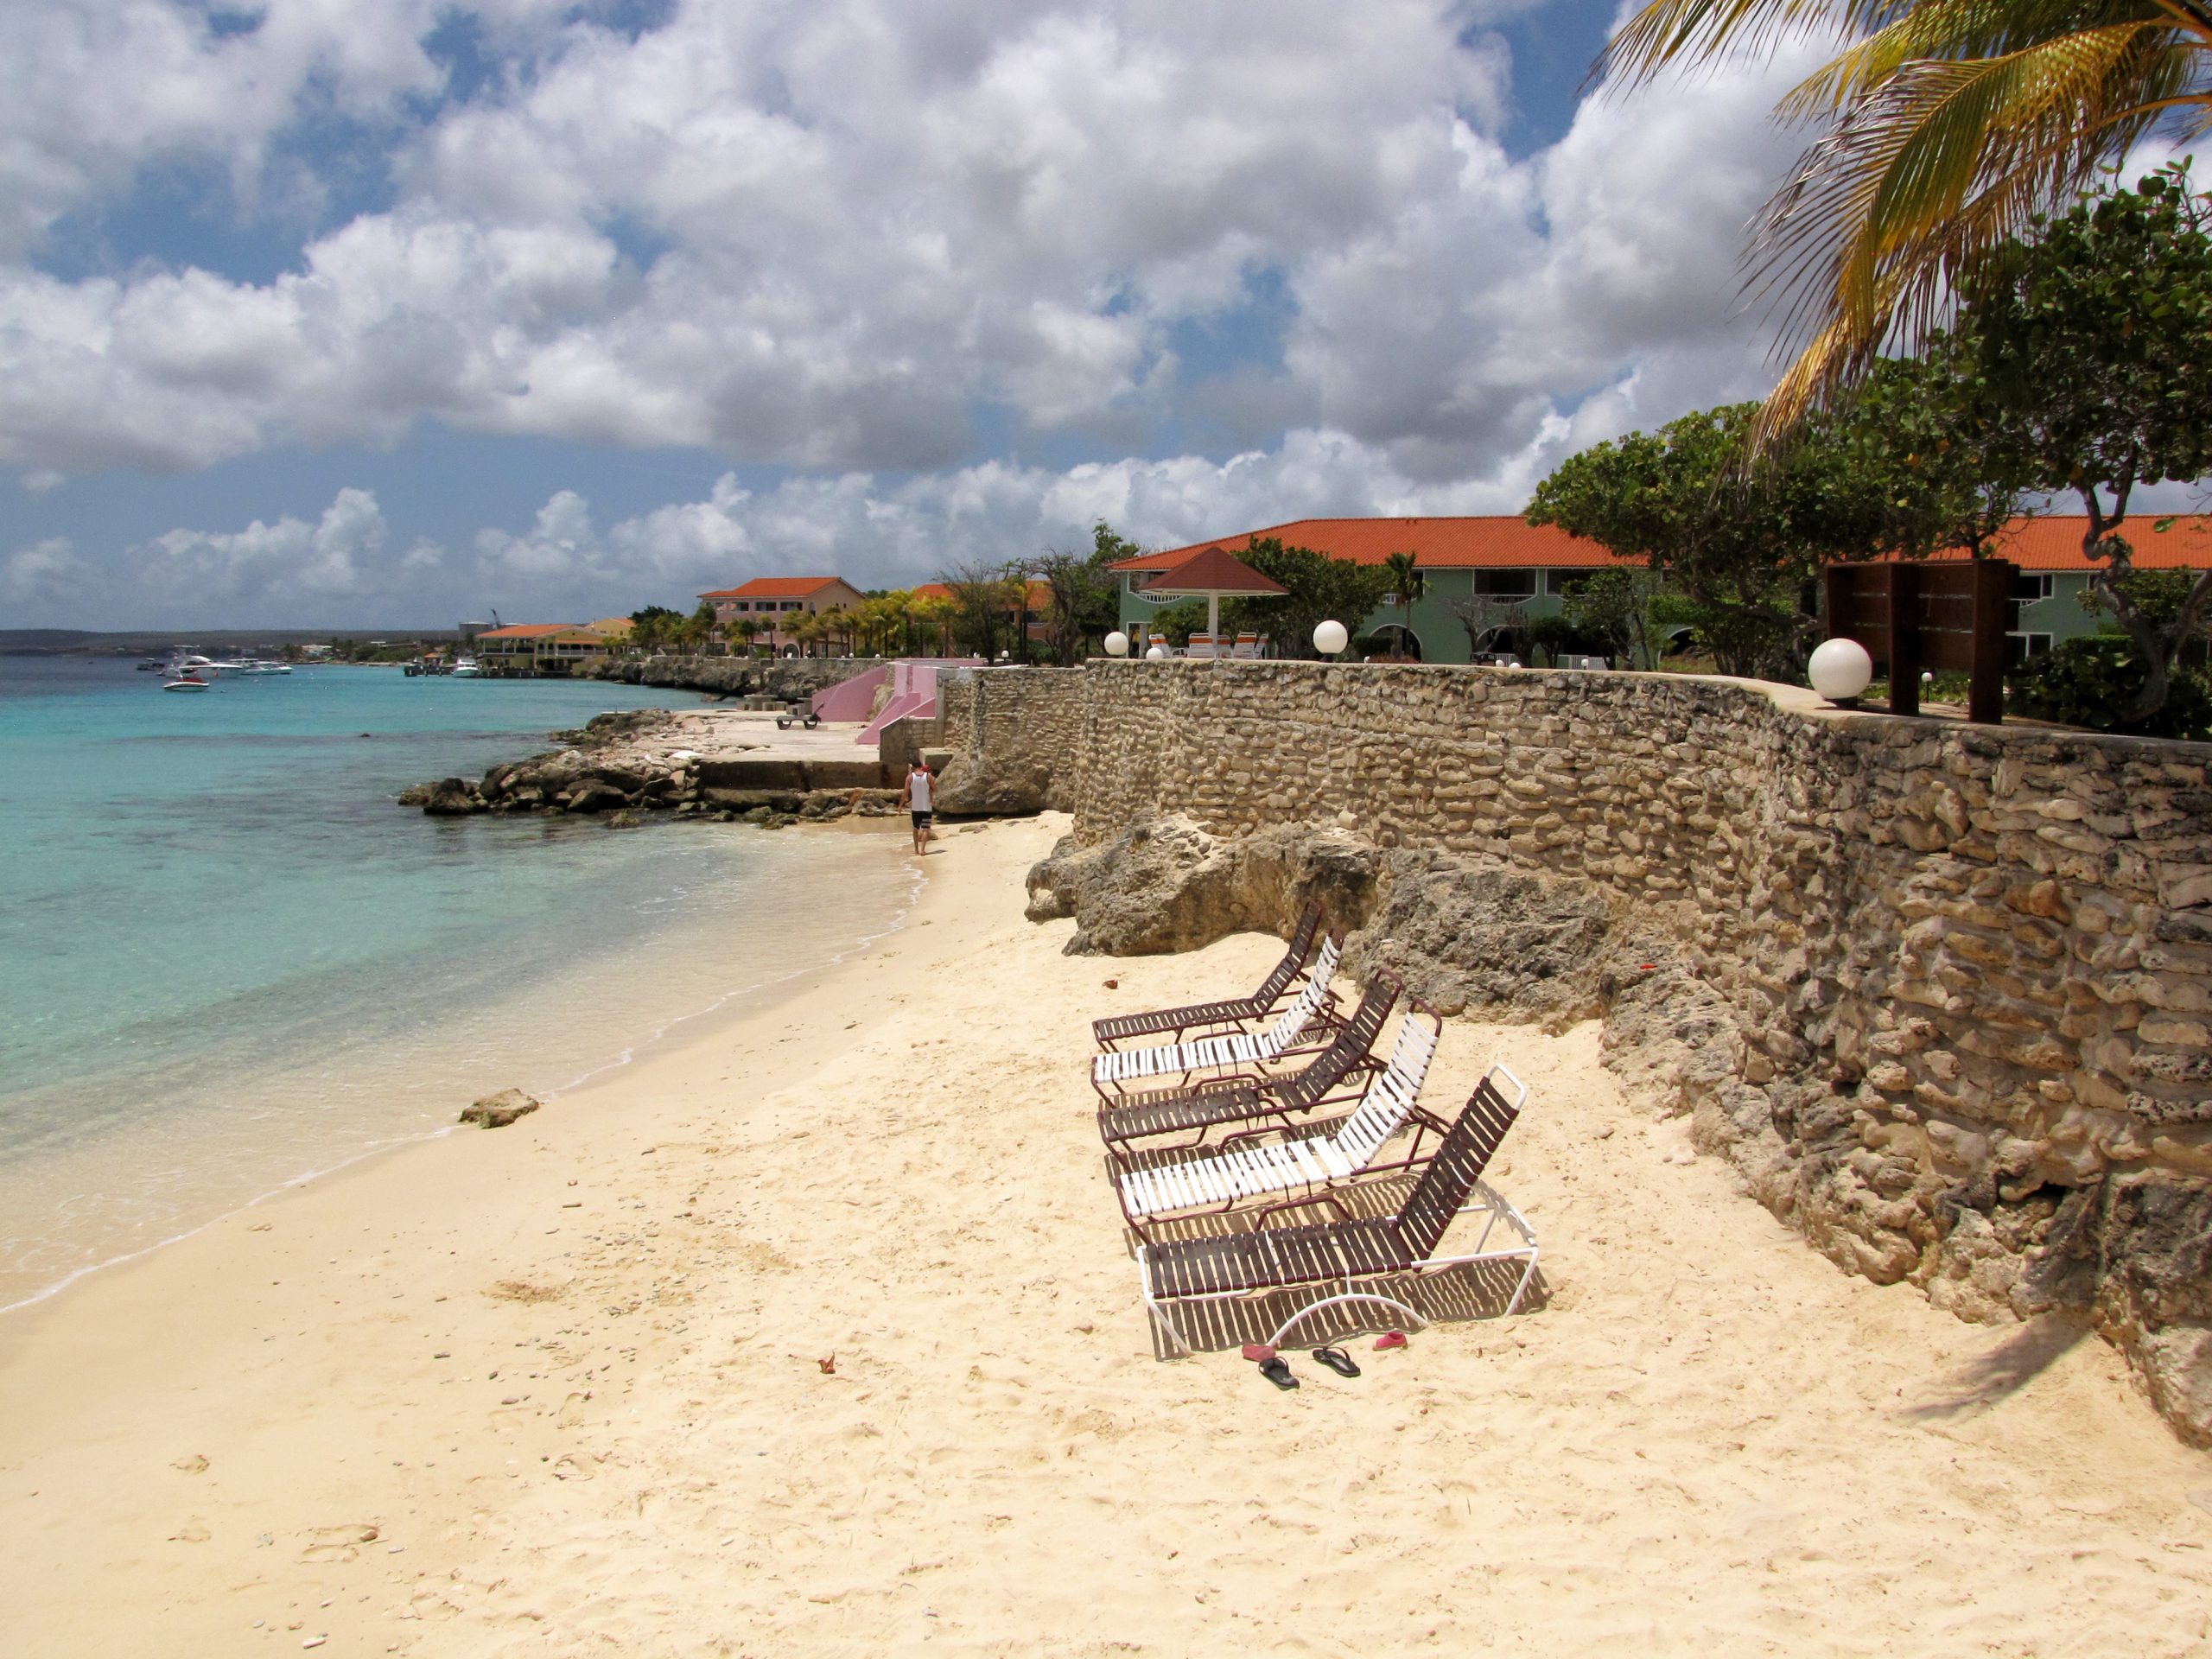 Sand Dollar Condominiums - Bonaire beach